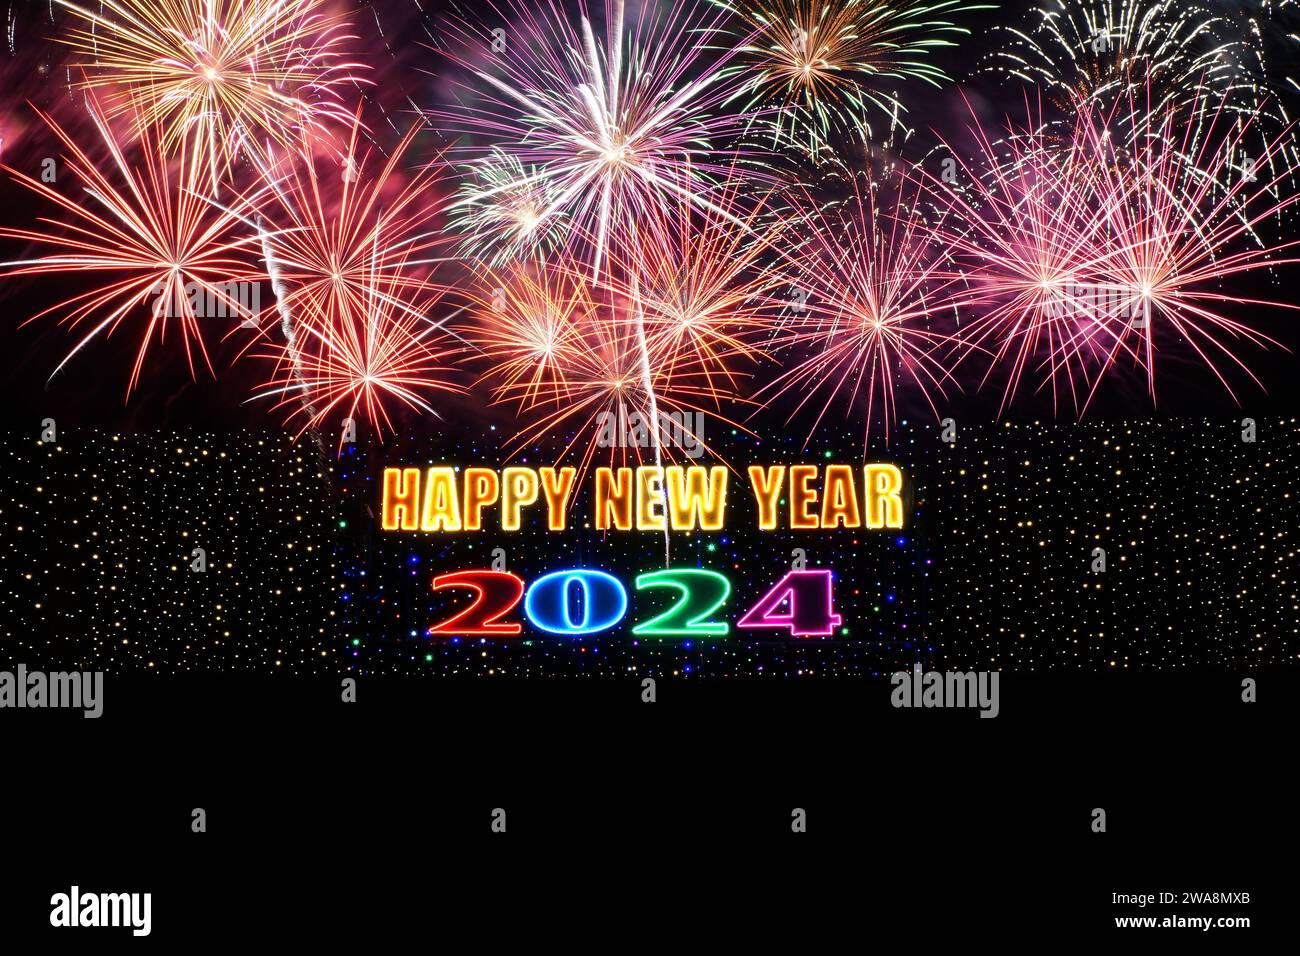 Happy New Year 2024 illuminated sign with firework background Stock Photo